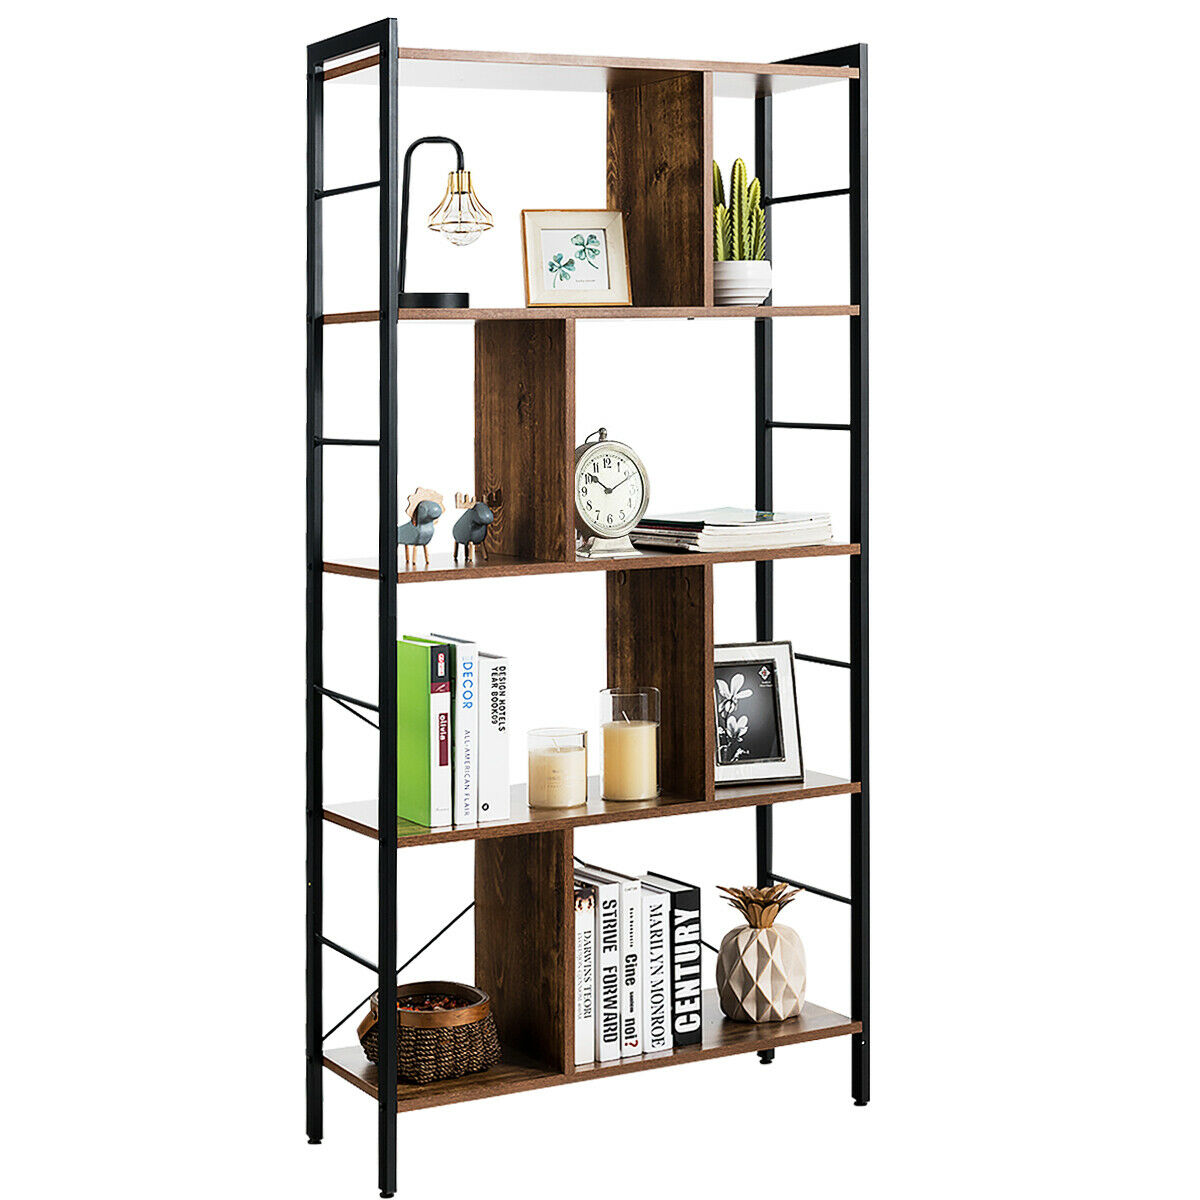 5 Tier Display Stand / Bookshelves